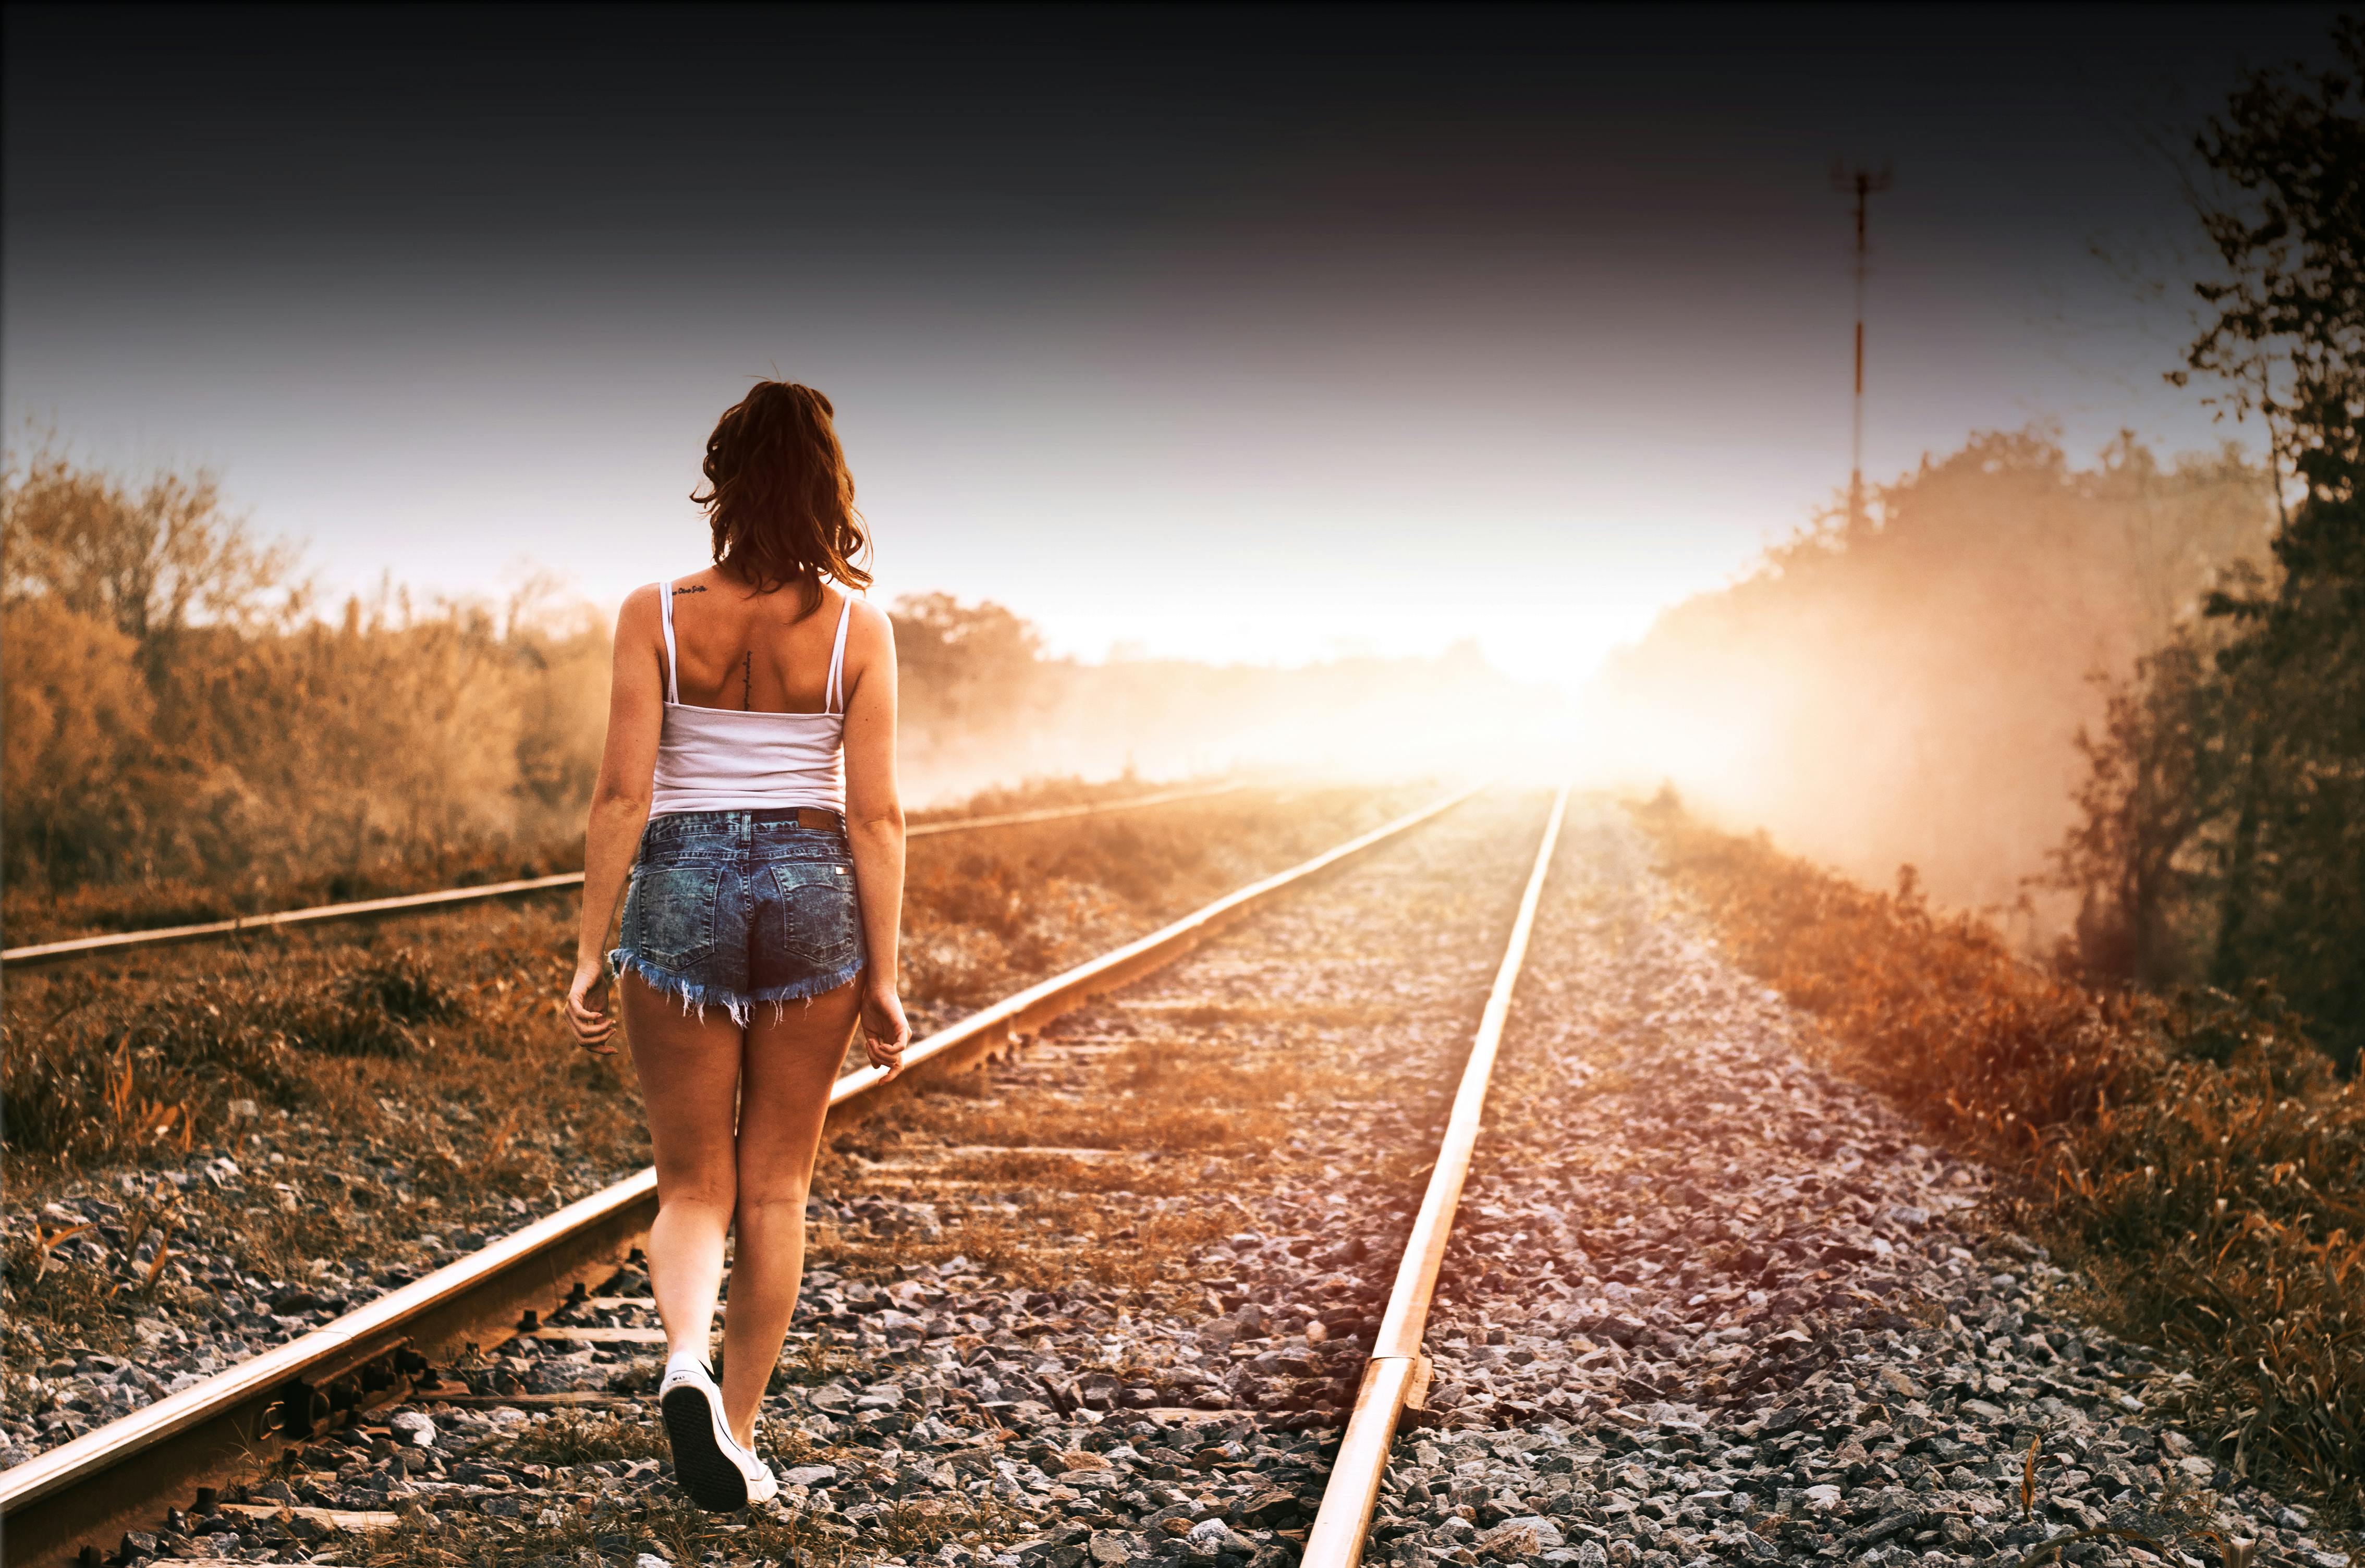 Free stock photo of girl, golden sunset, railway